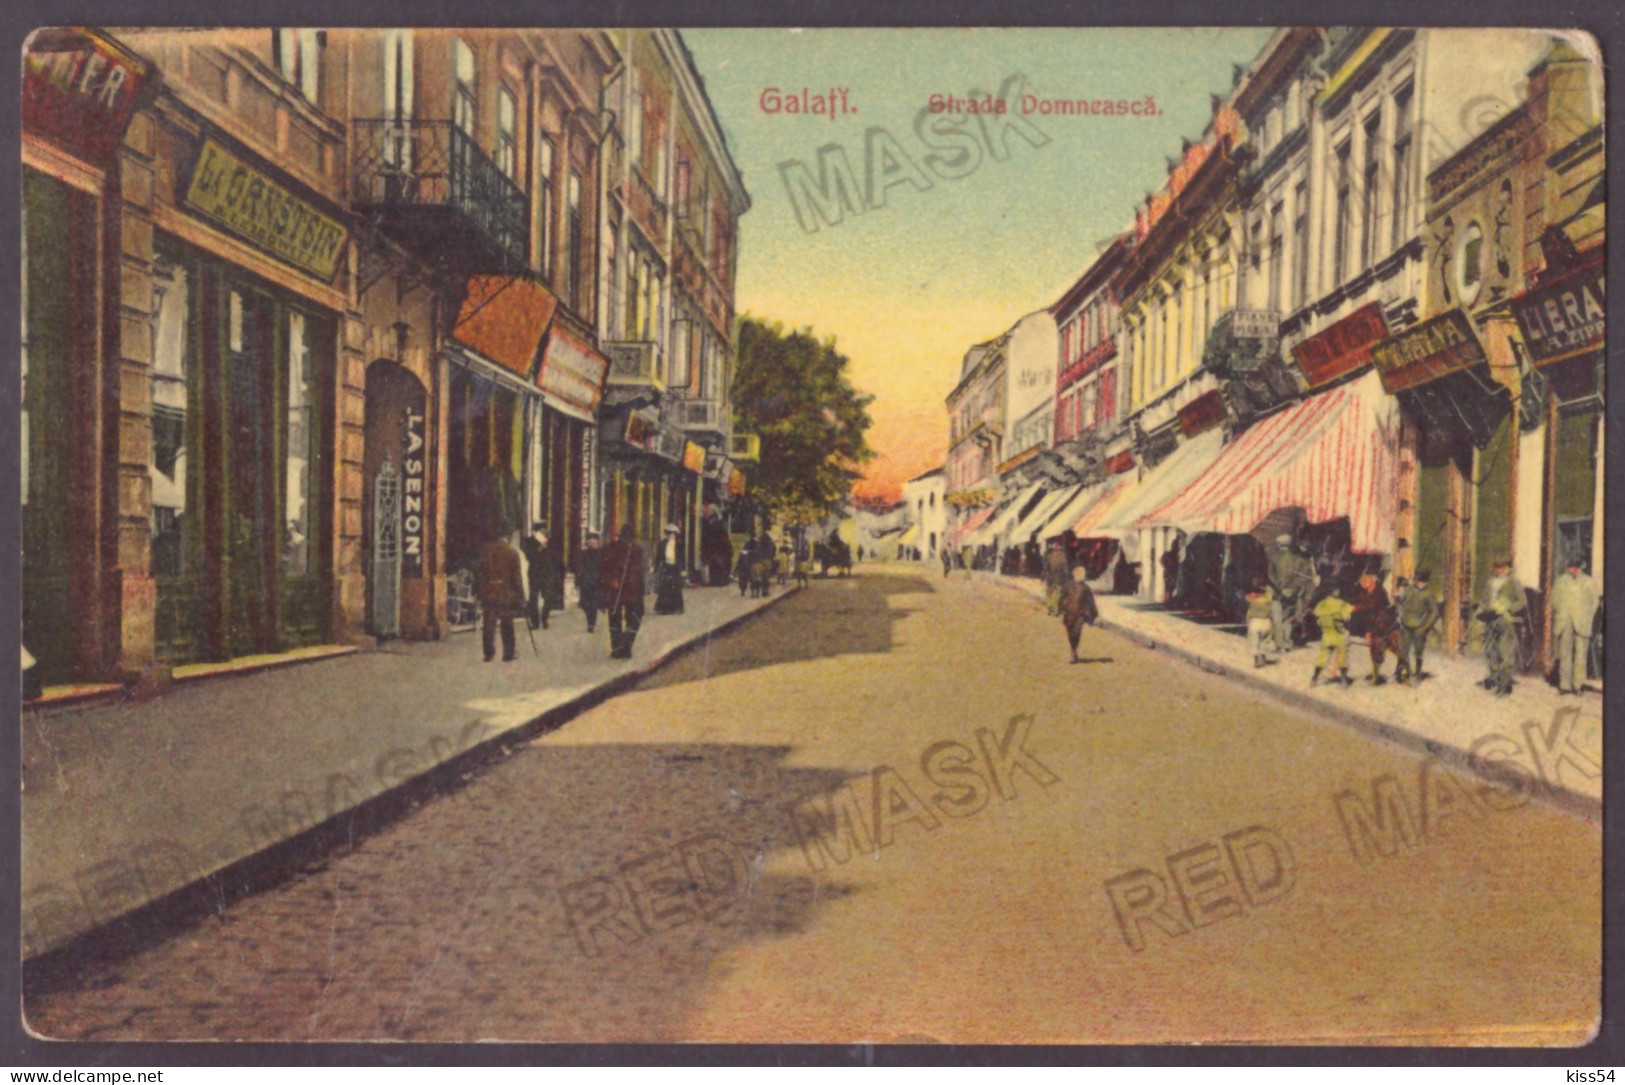 RO 40 - 23917 GALATI, Street Stores, Romania - Old Postcard - Used - 1911 - Romania